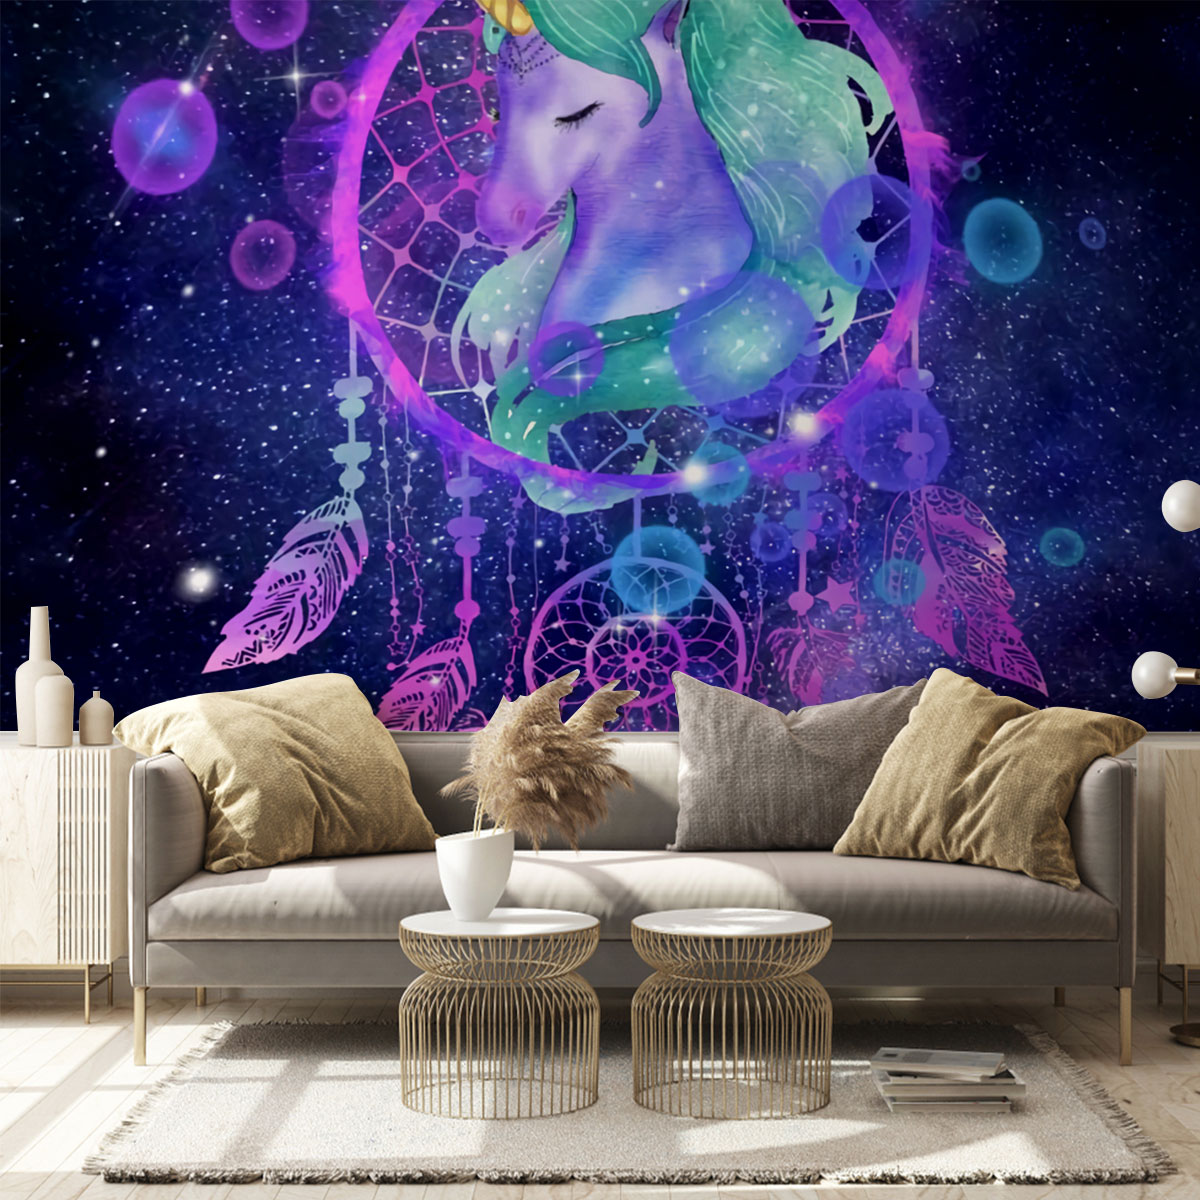 Galaxy Unicorn With Dream Catcher Wall Mural_2_1